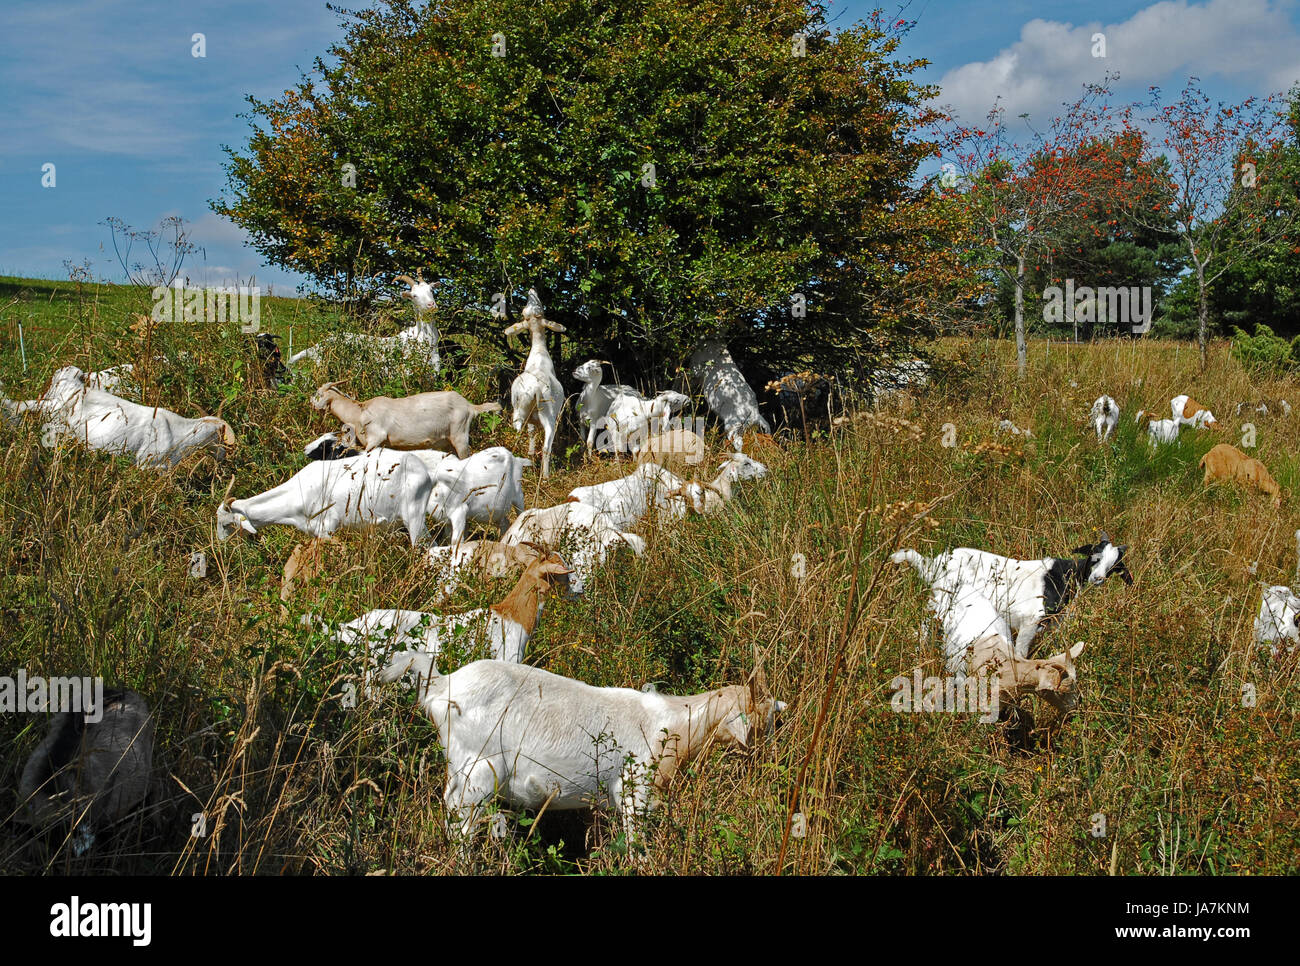 goats, heath, blue, tree, animal, goat, goats, mammals, care, shrub, to gorge, Stock Photo